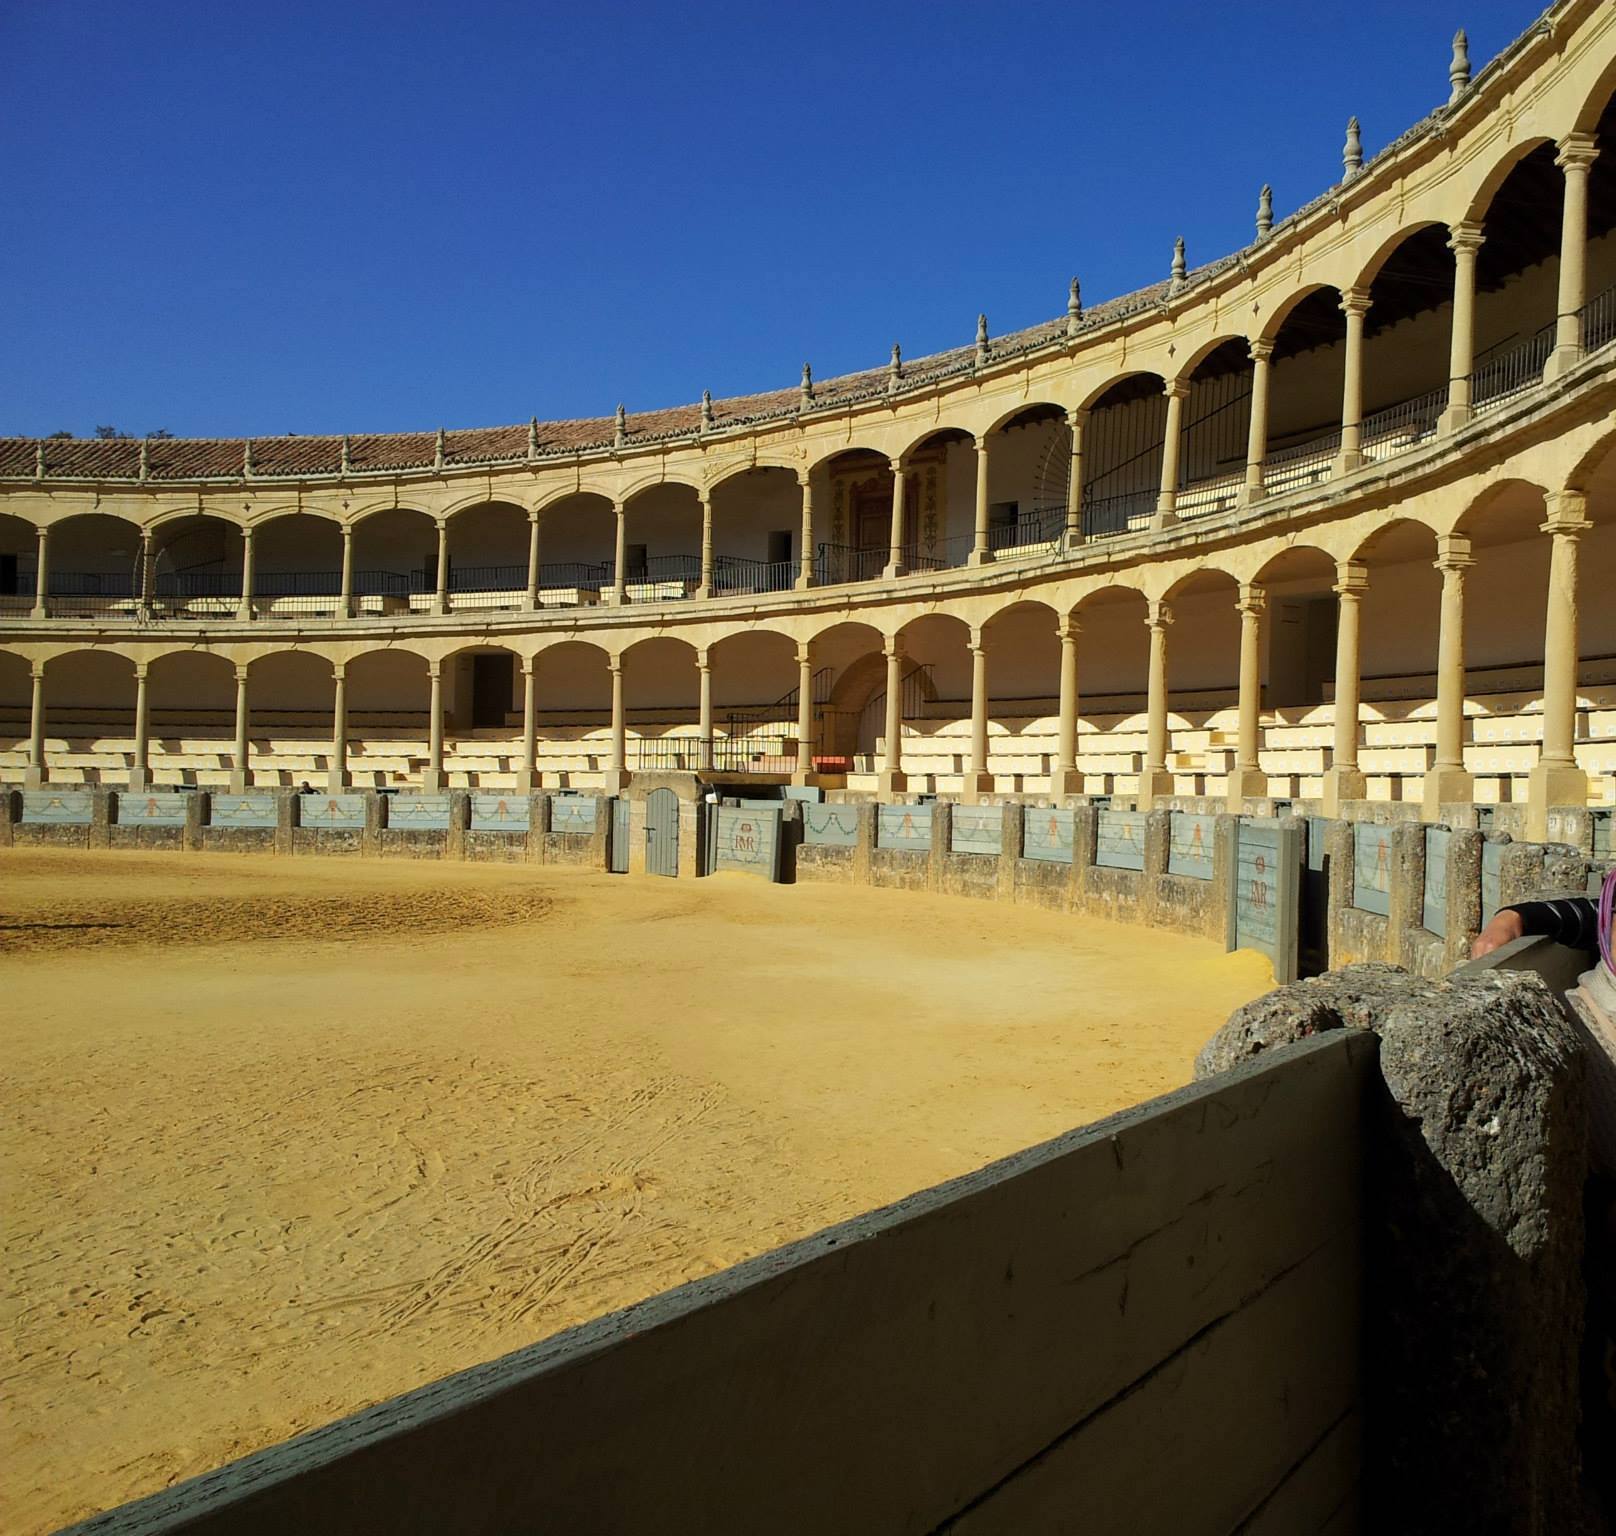 Inside the bullfighting stadium